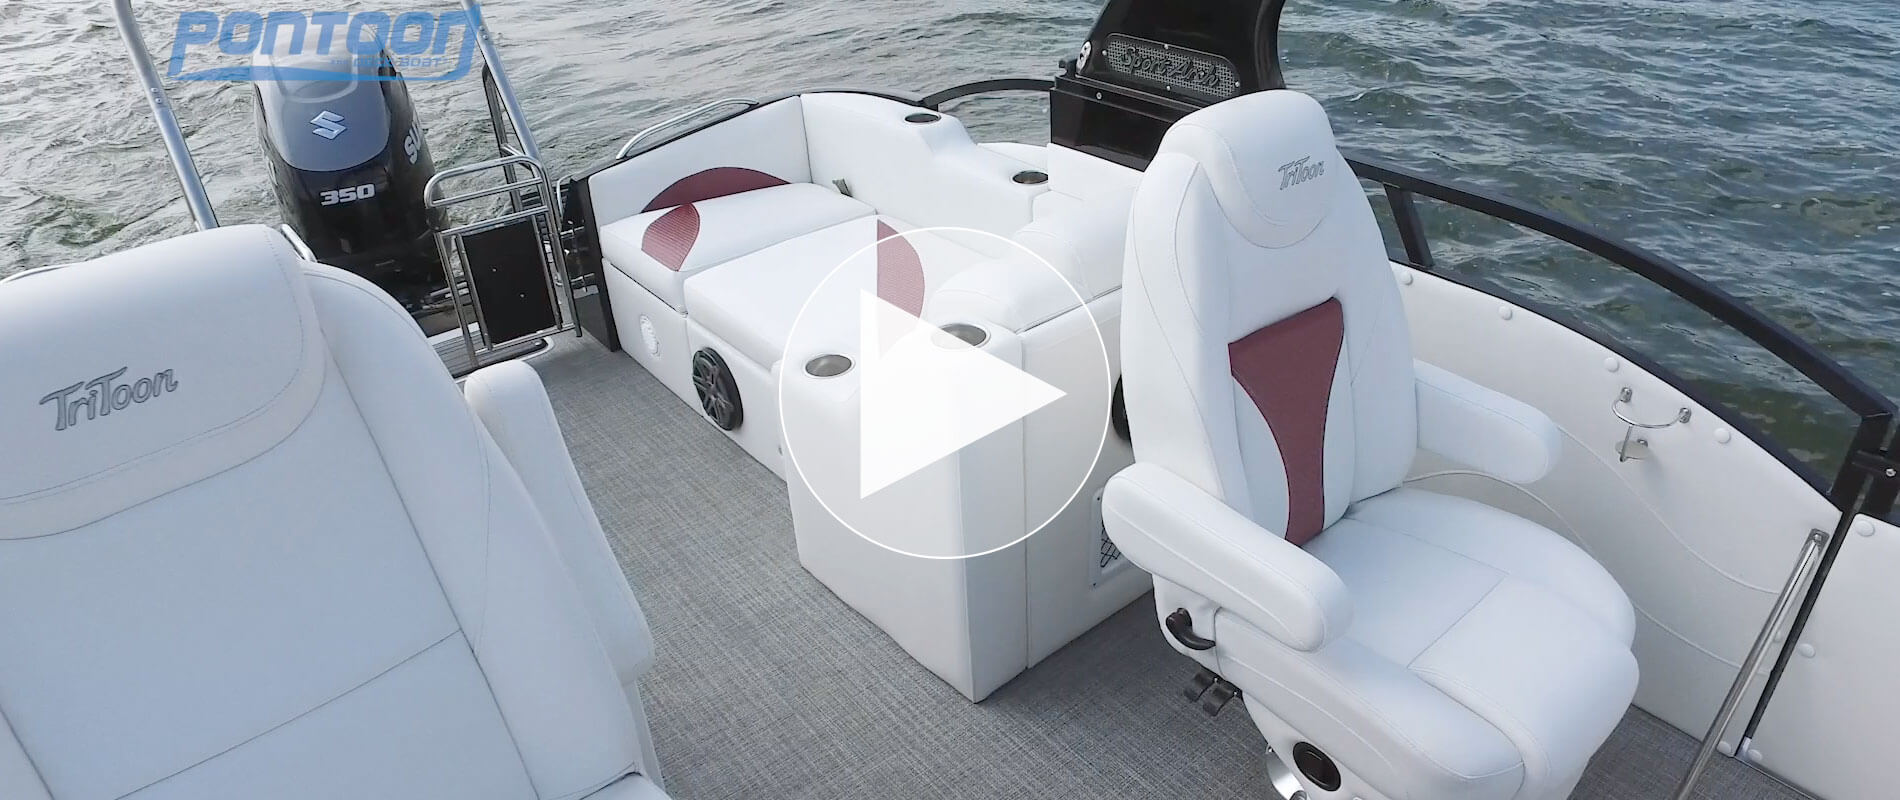 Pontoon & Deck Boat Magazine 2019 Shootout Video featuring the SportToon 28TT HTH